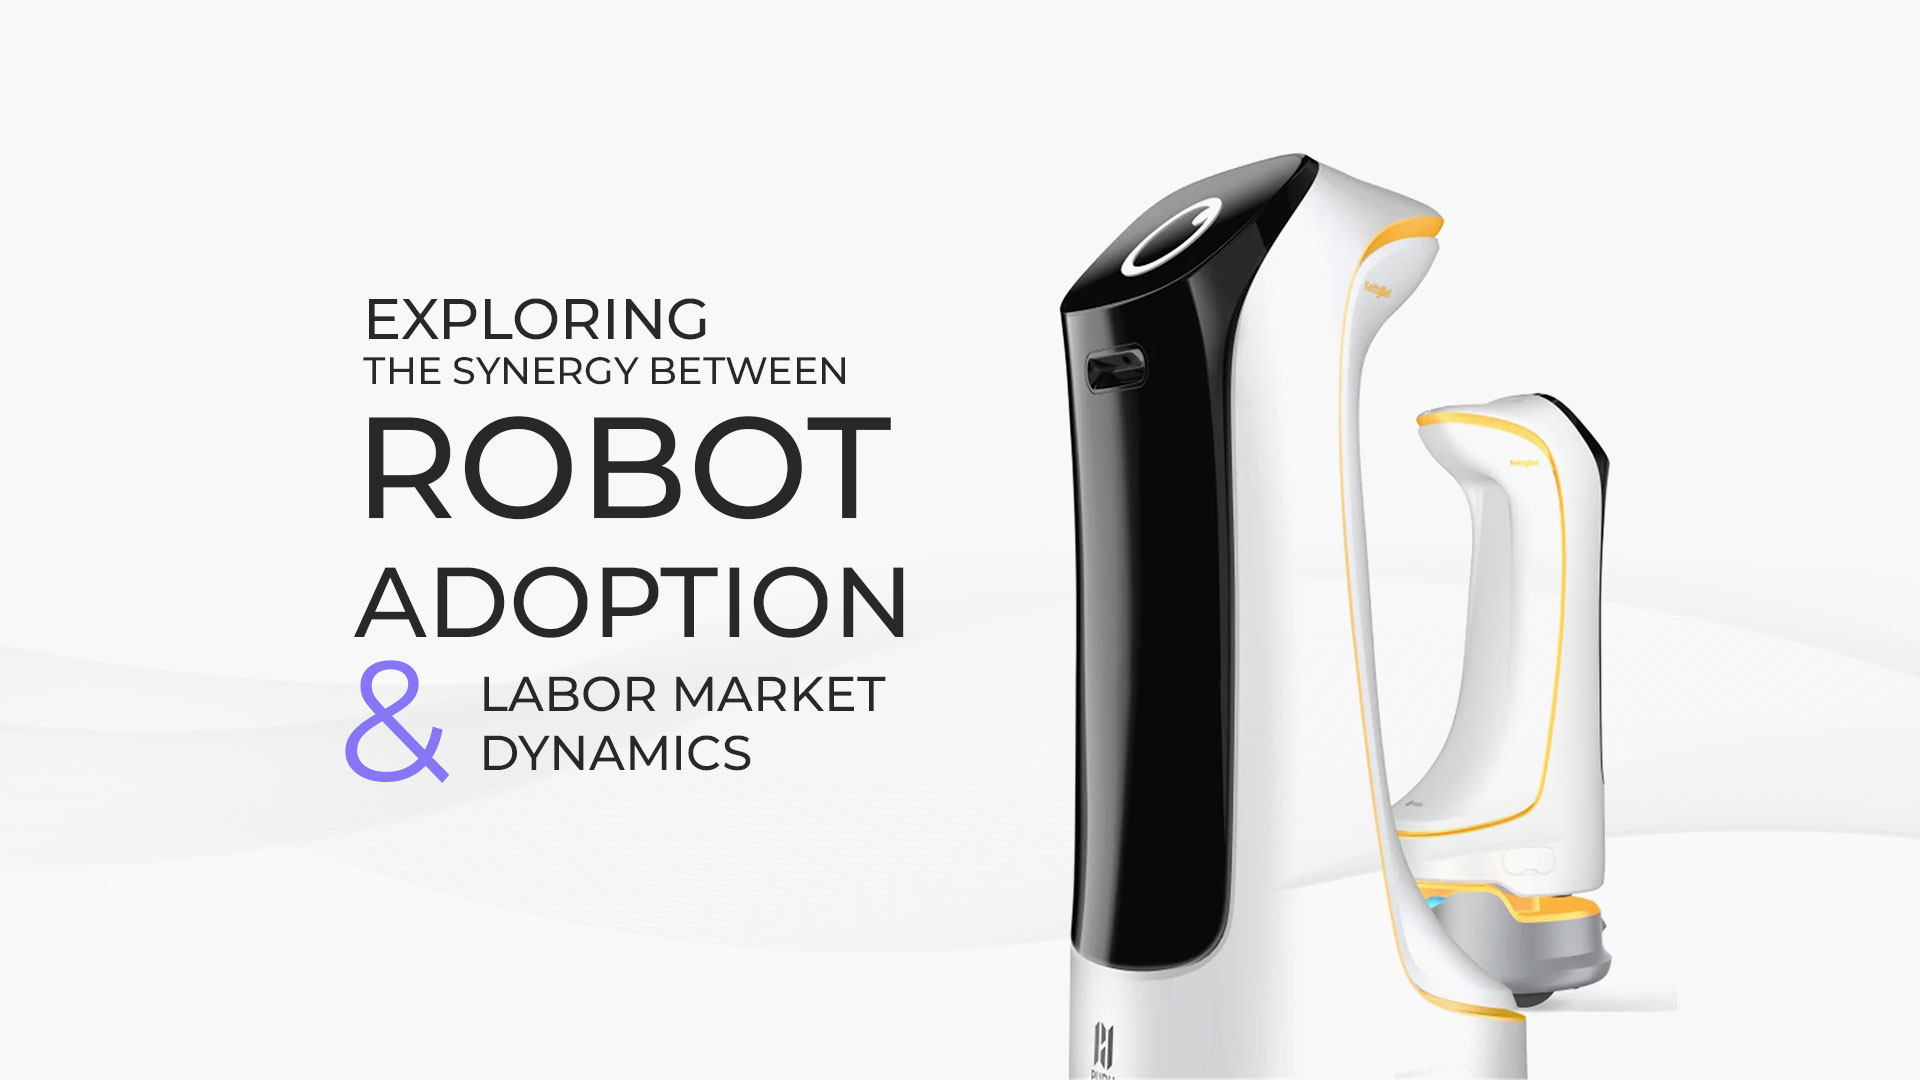 robot adoption and labor market dynamics